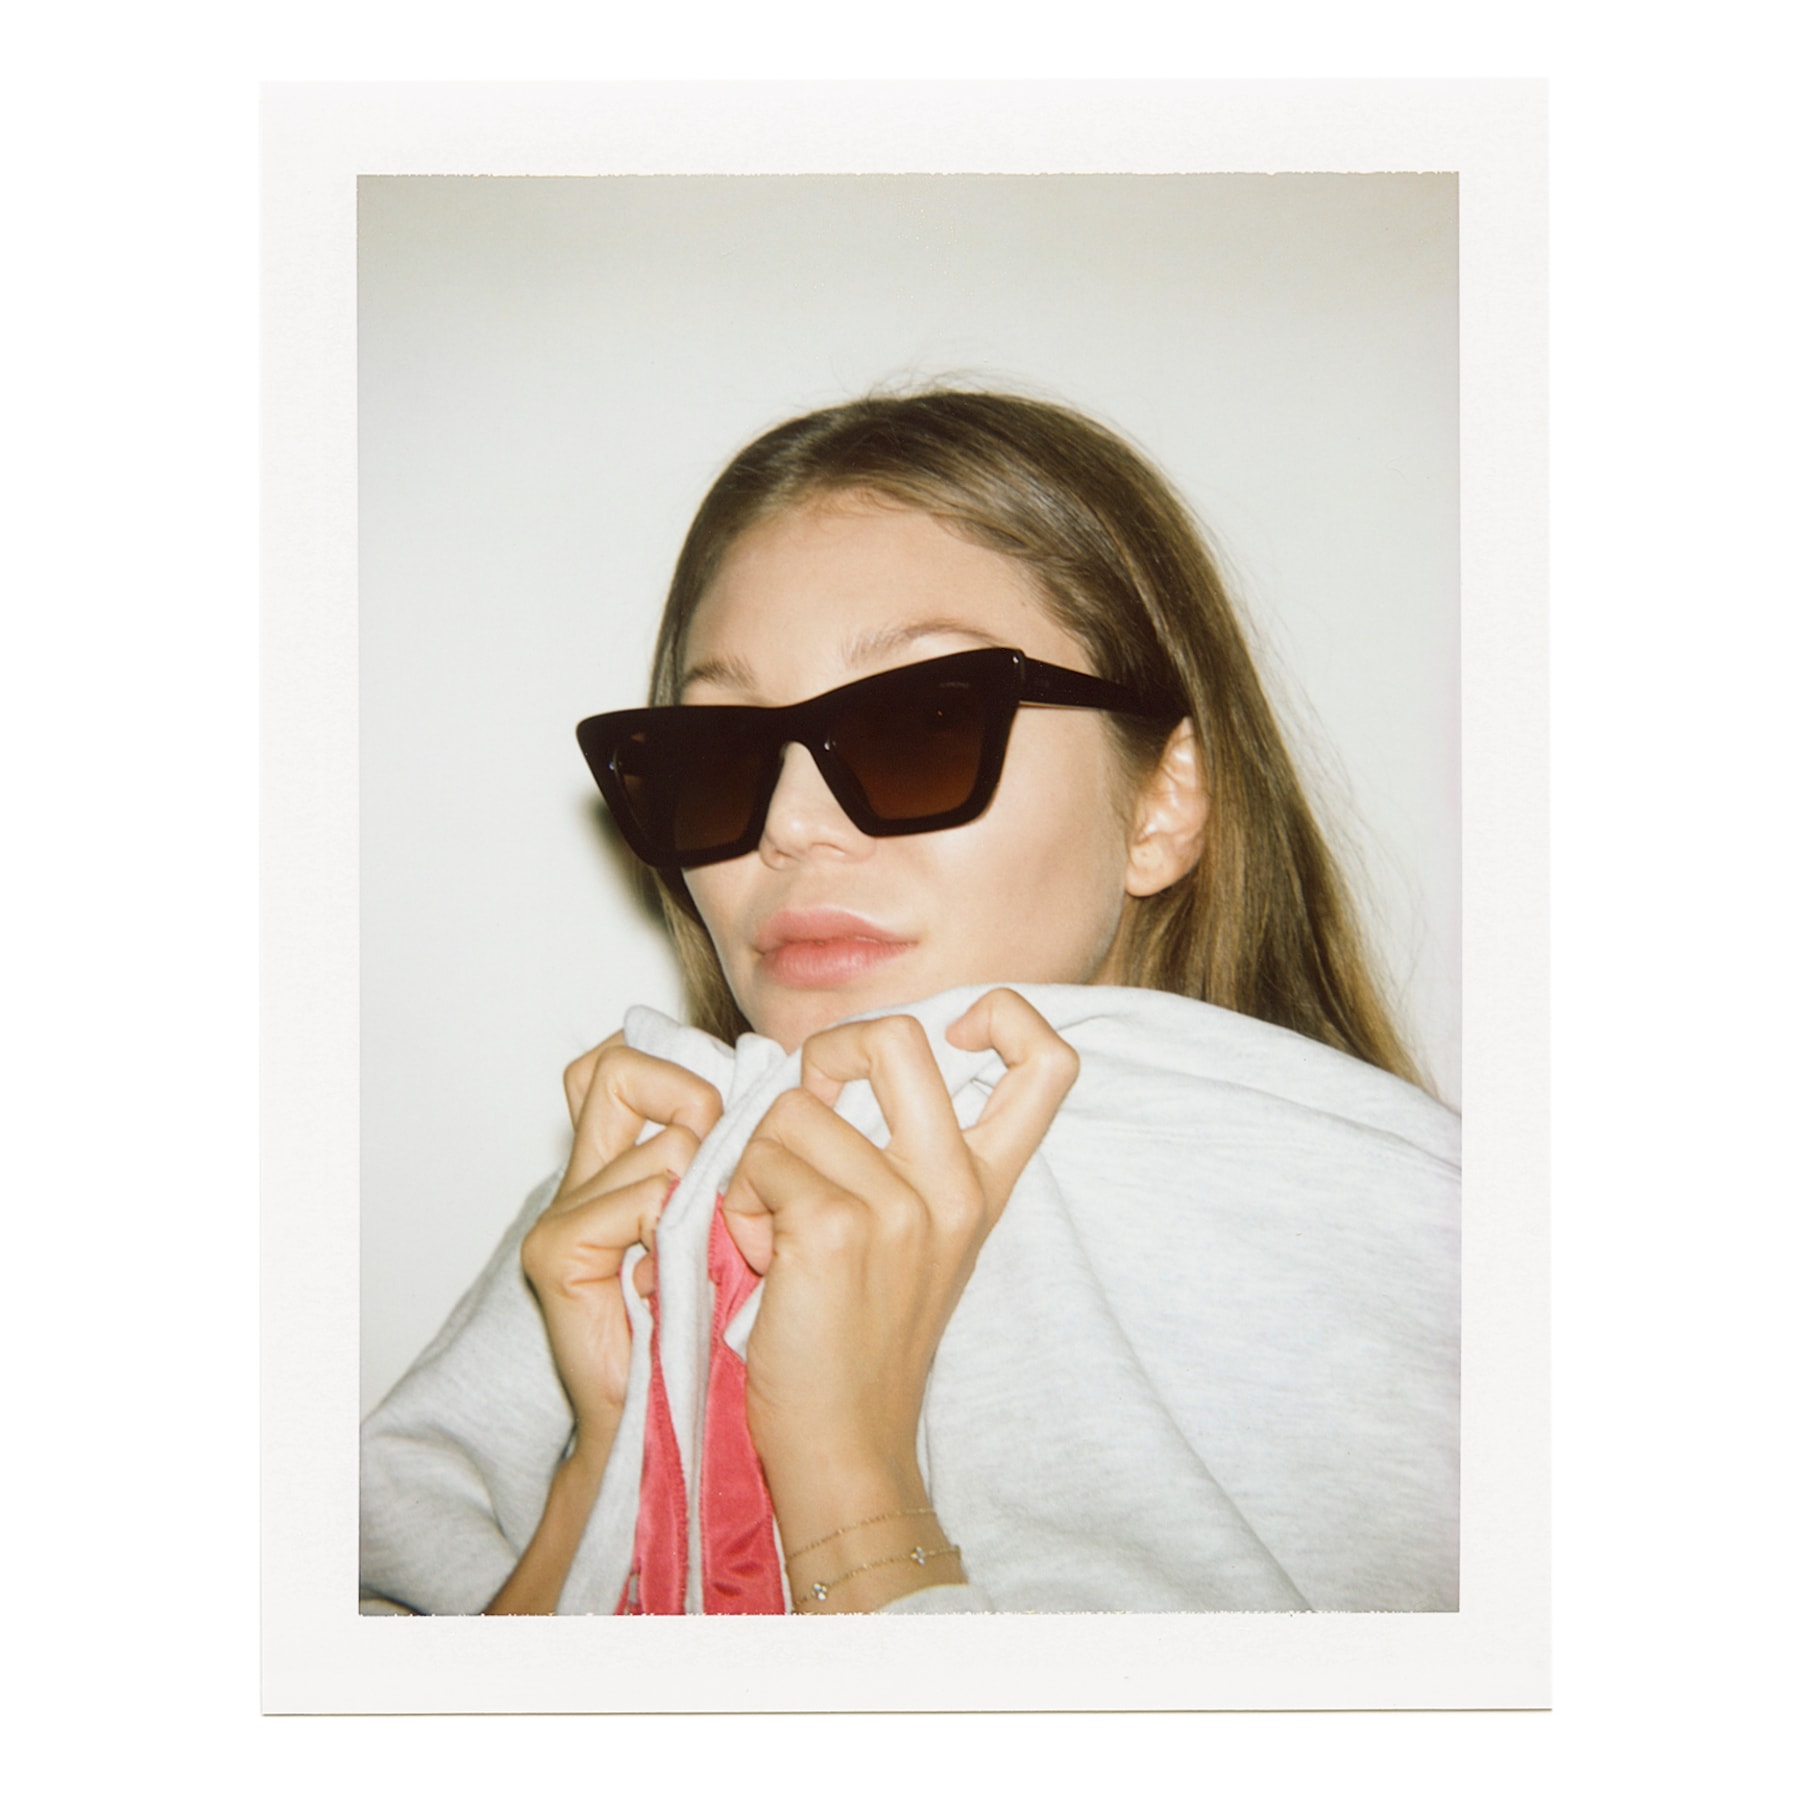 Jessie Andrews x KOMONO Sunglasses Collaboration Shades Lookbook Capsule Collection